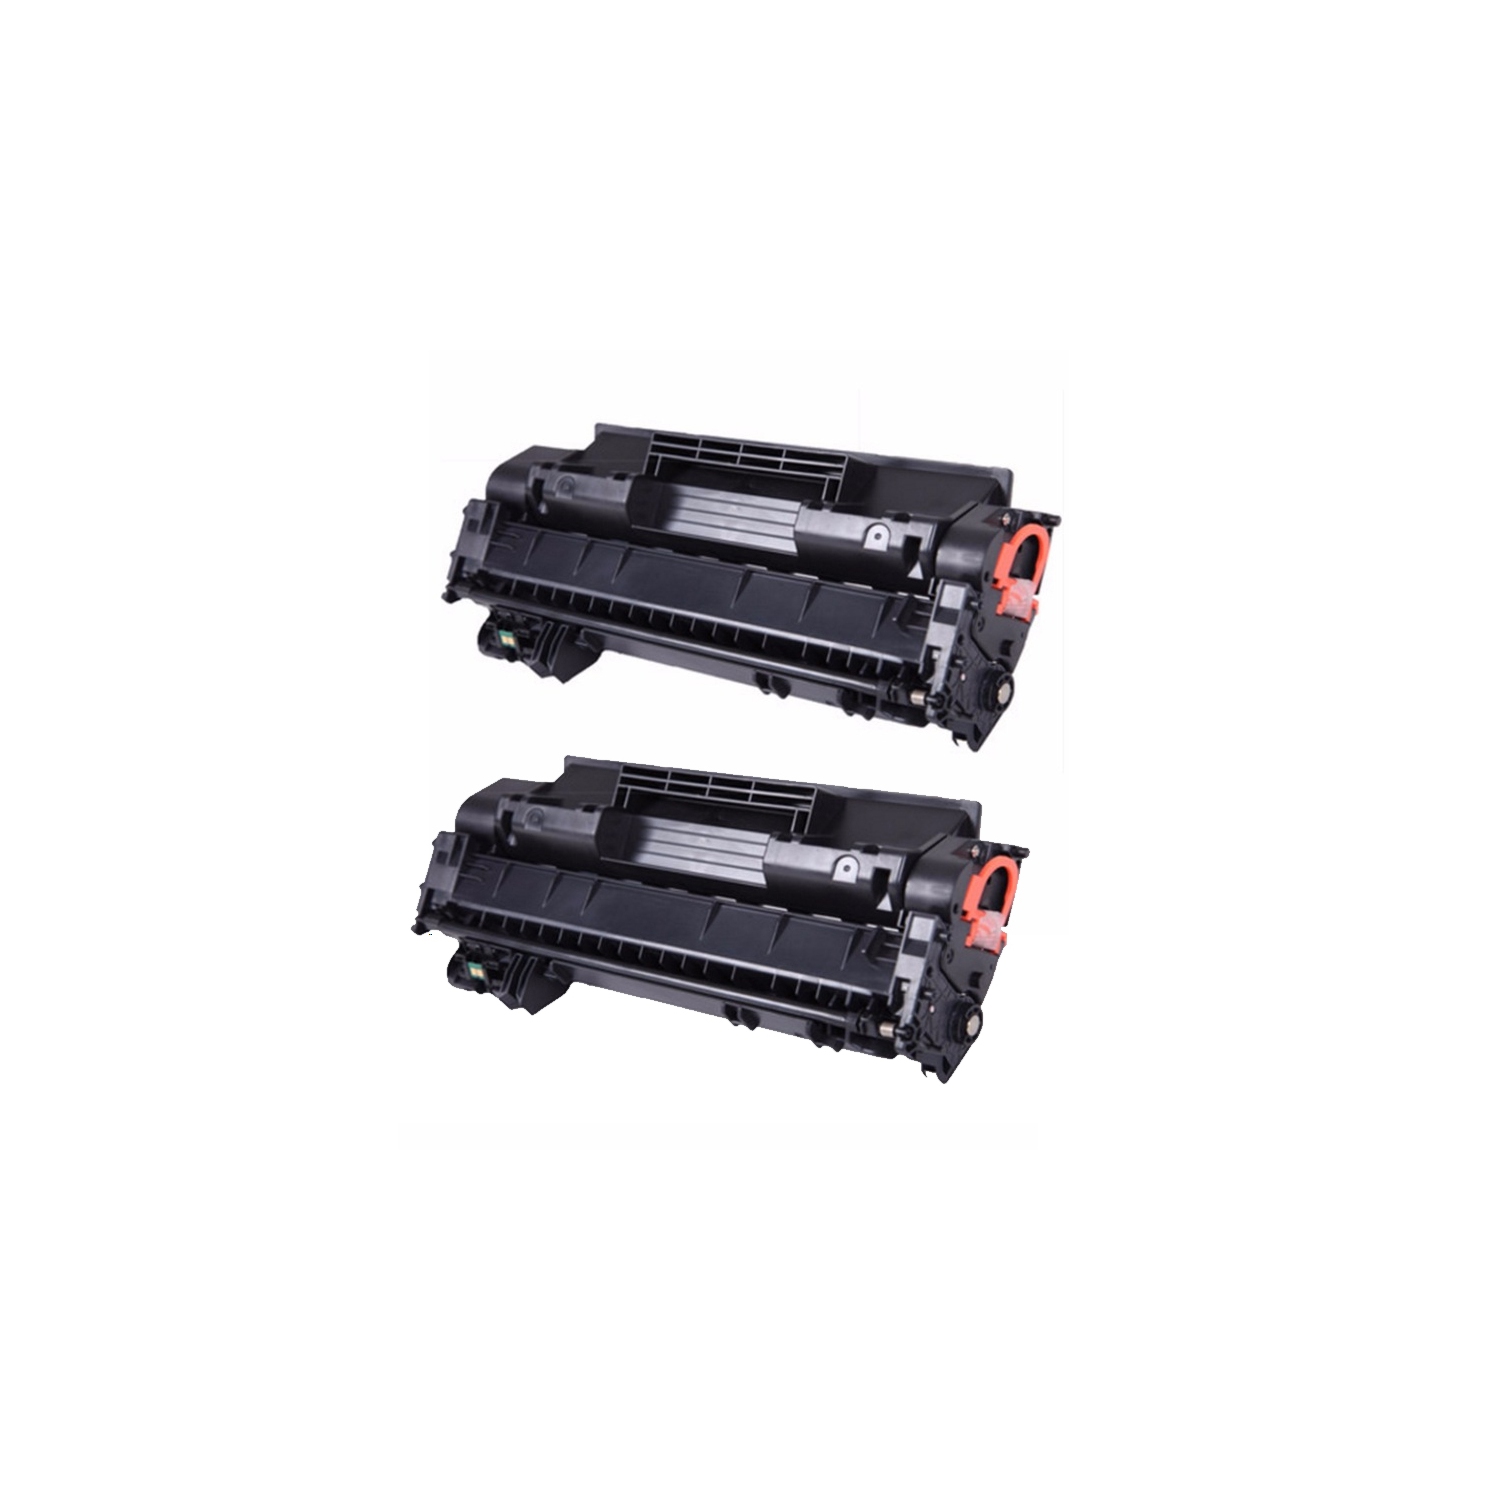 2Pack Compatible Toner Cartridge for Canon 119 Black imageCLASS LBP6300dn (3479B001) LBP6650dn, LBP6670dn, MF5850, MF5880, MF5950dw, MF5960dn, MF6160dw, MF6180dw